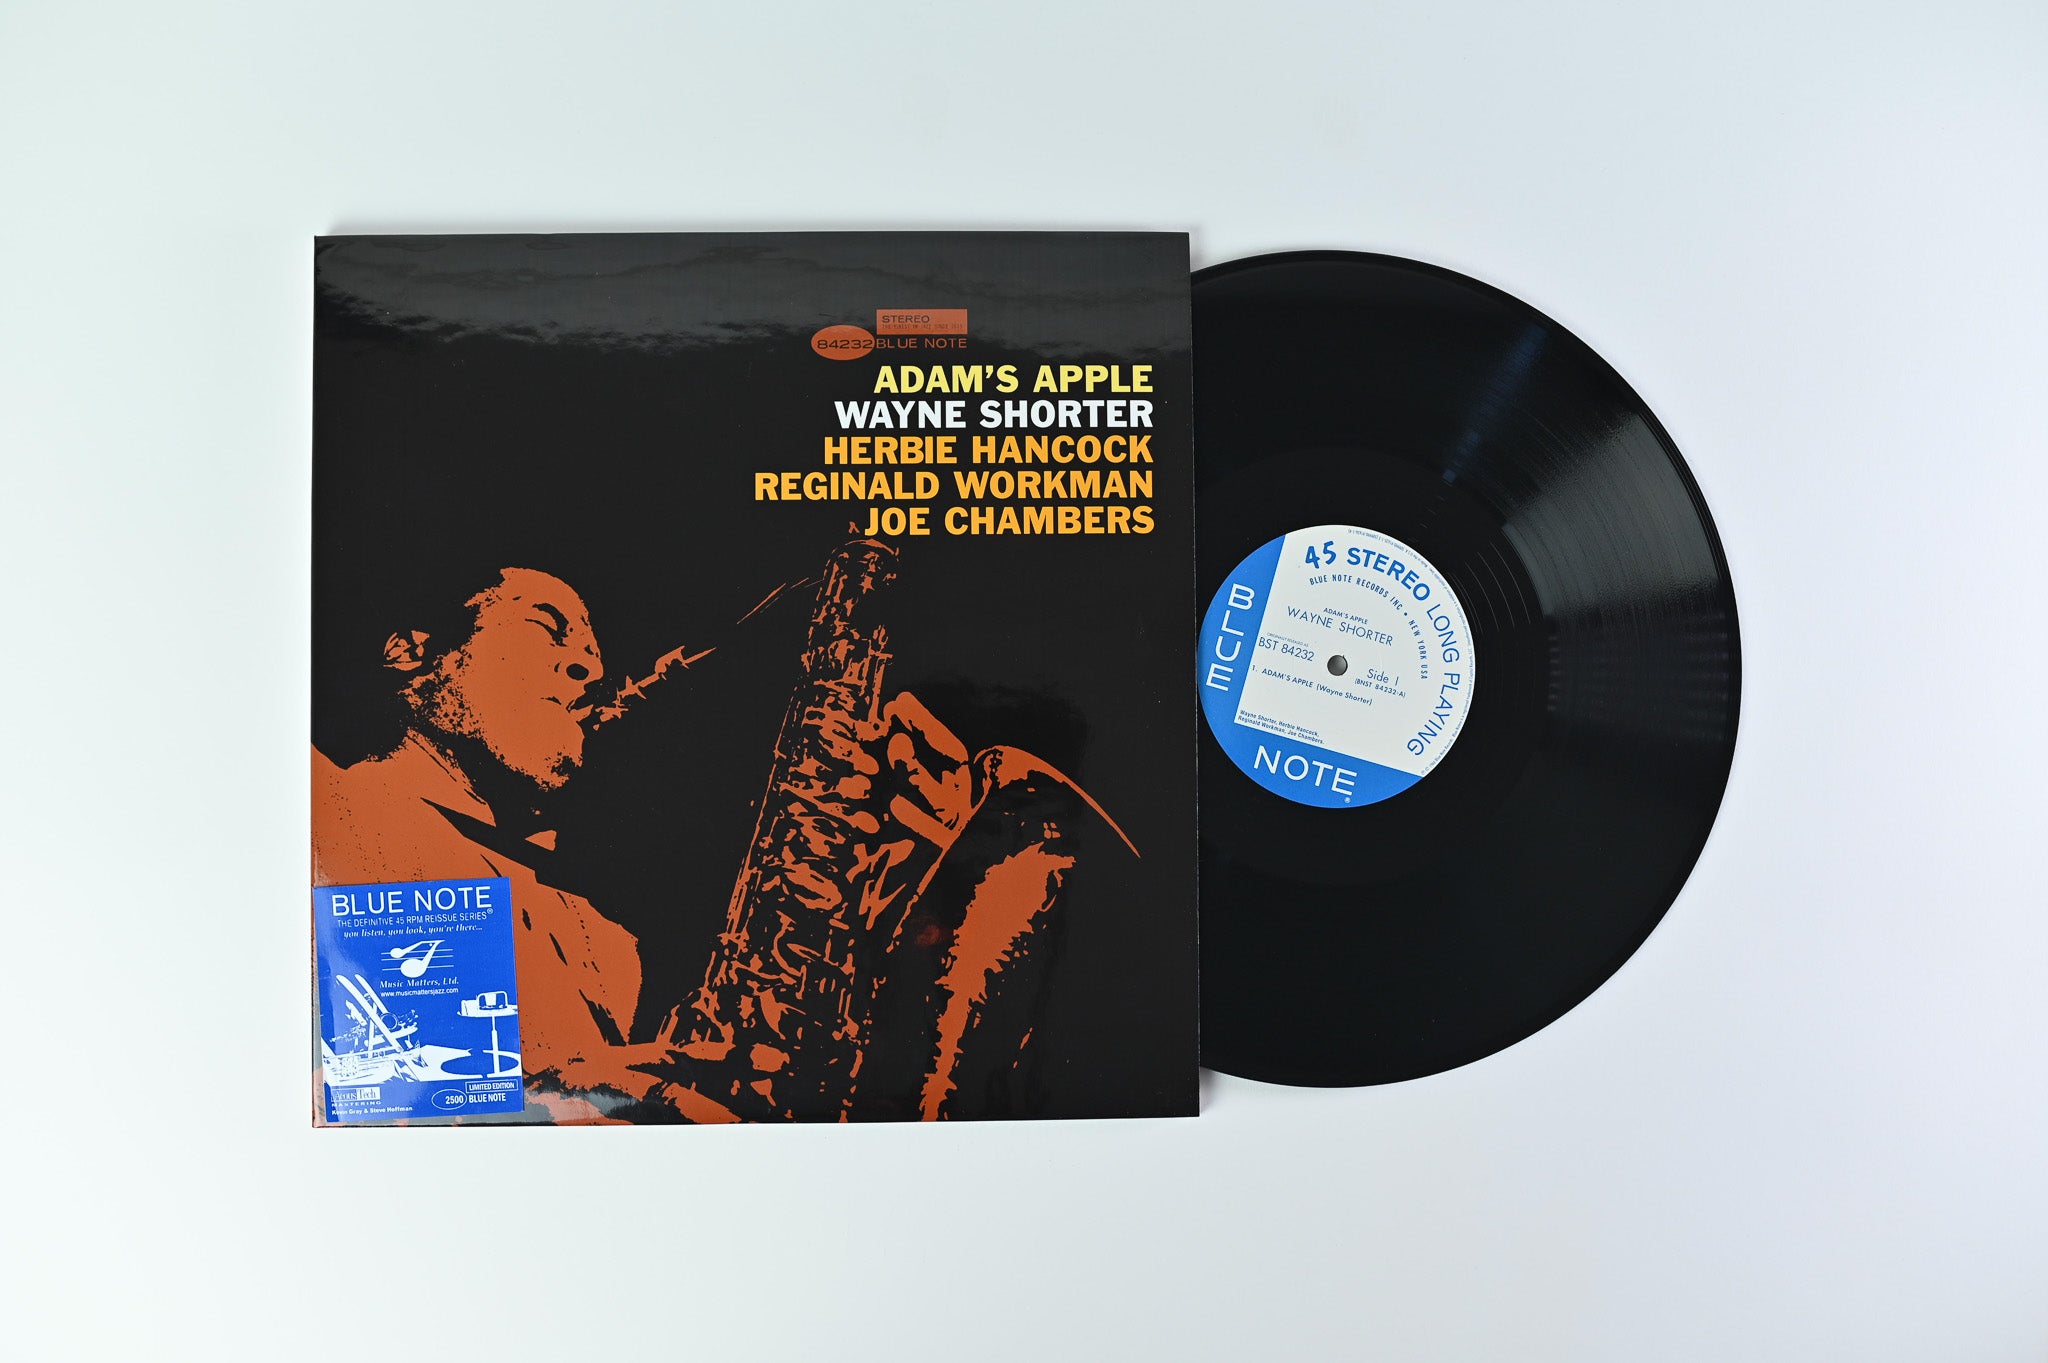 Wayne Shorter - Adam's Apple on Blue Note Music Matters Ltd 45 RPM Reissue